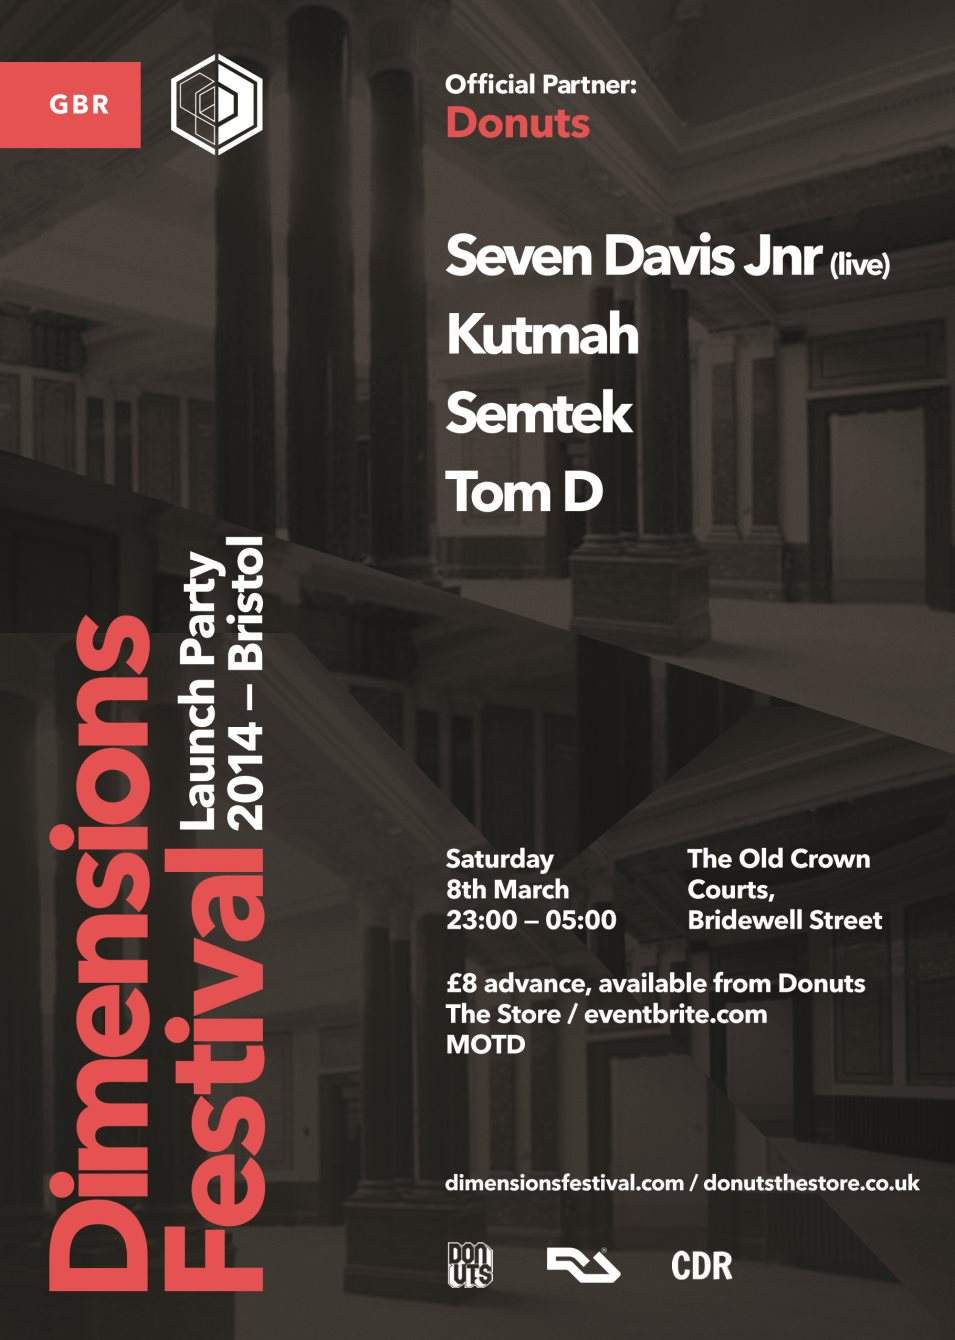 Donuts presents: Dimensions Festival 2014 Launch Party - Seven Davis JR., Kutmah, Semtek - フライヤー表